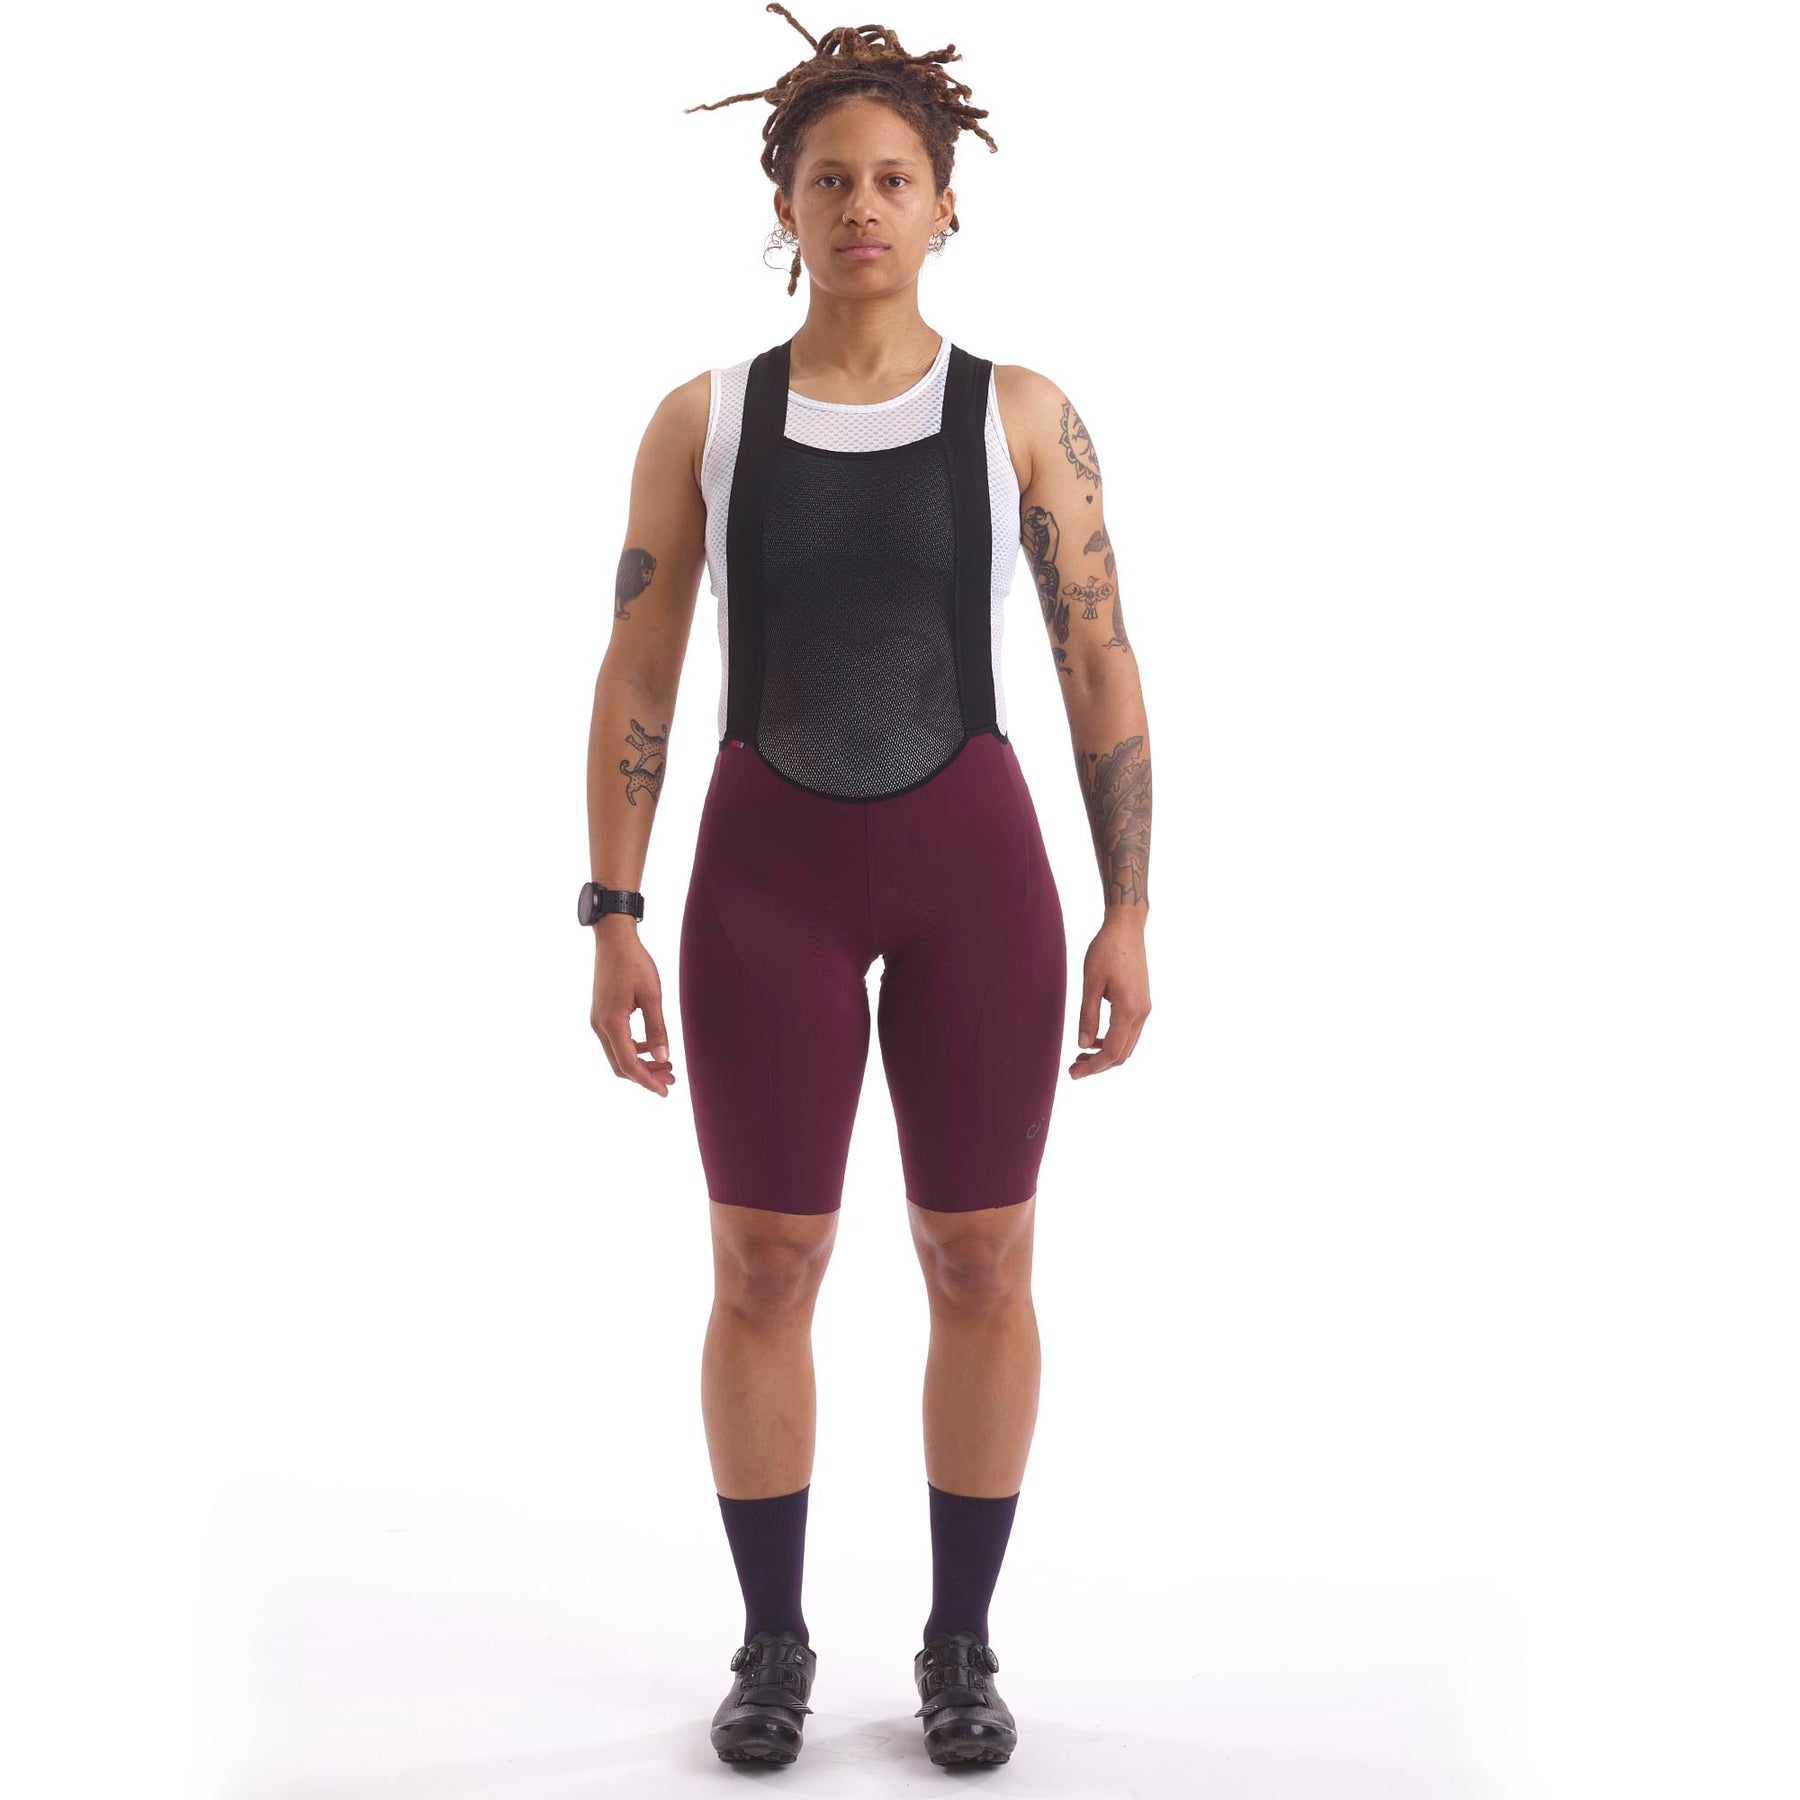 Luxesoft Quad Bike Shorts  Bike shorts, Sport outfit woman, Sport